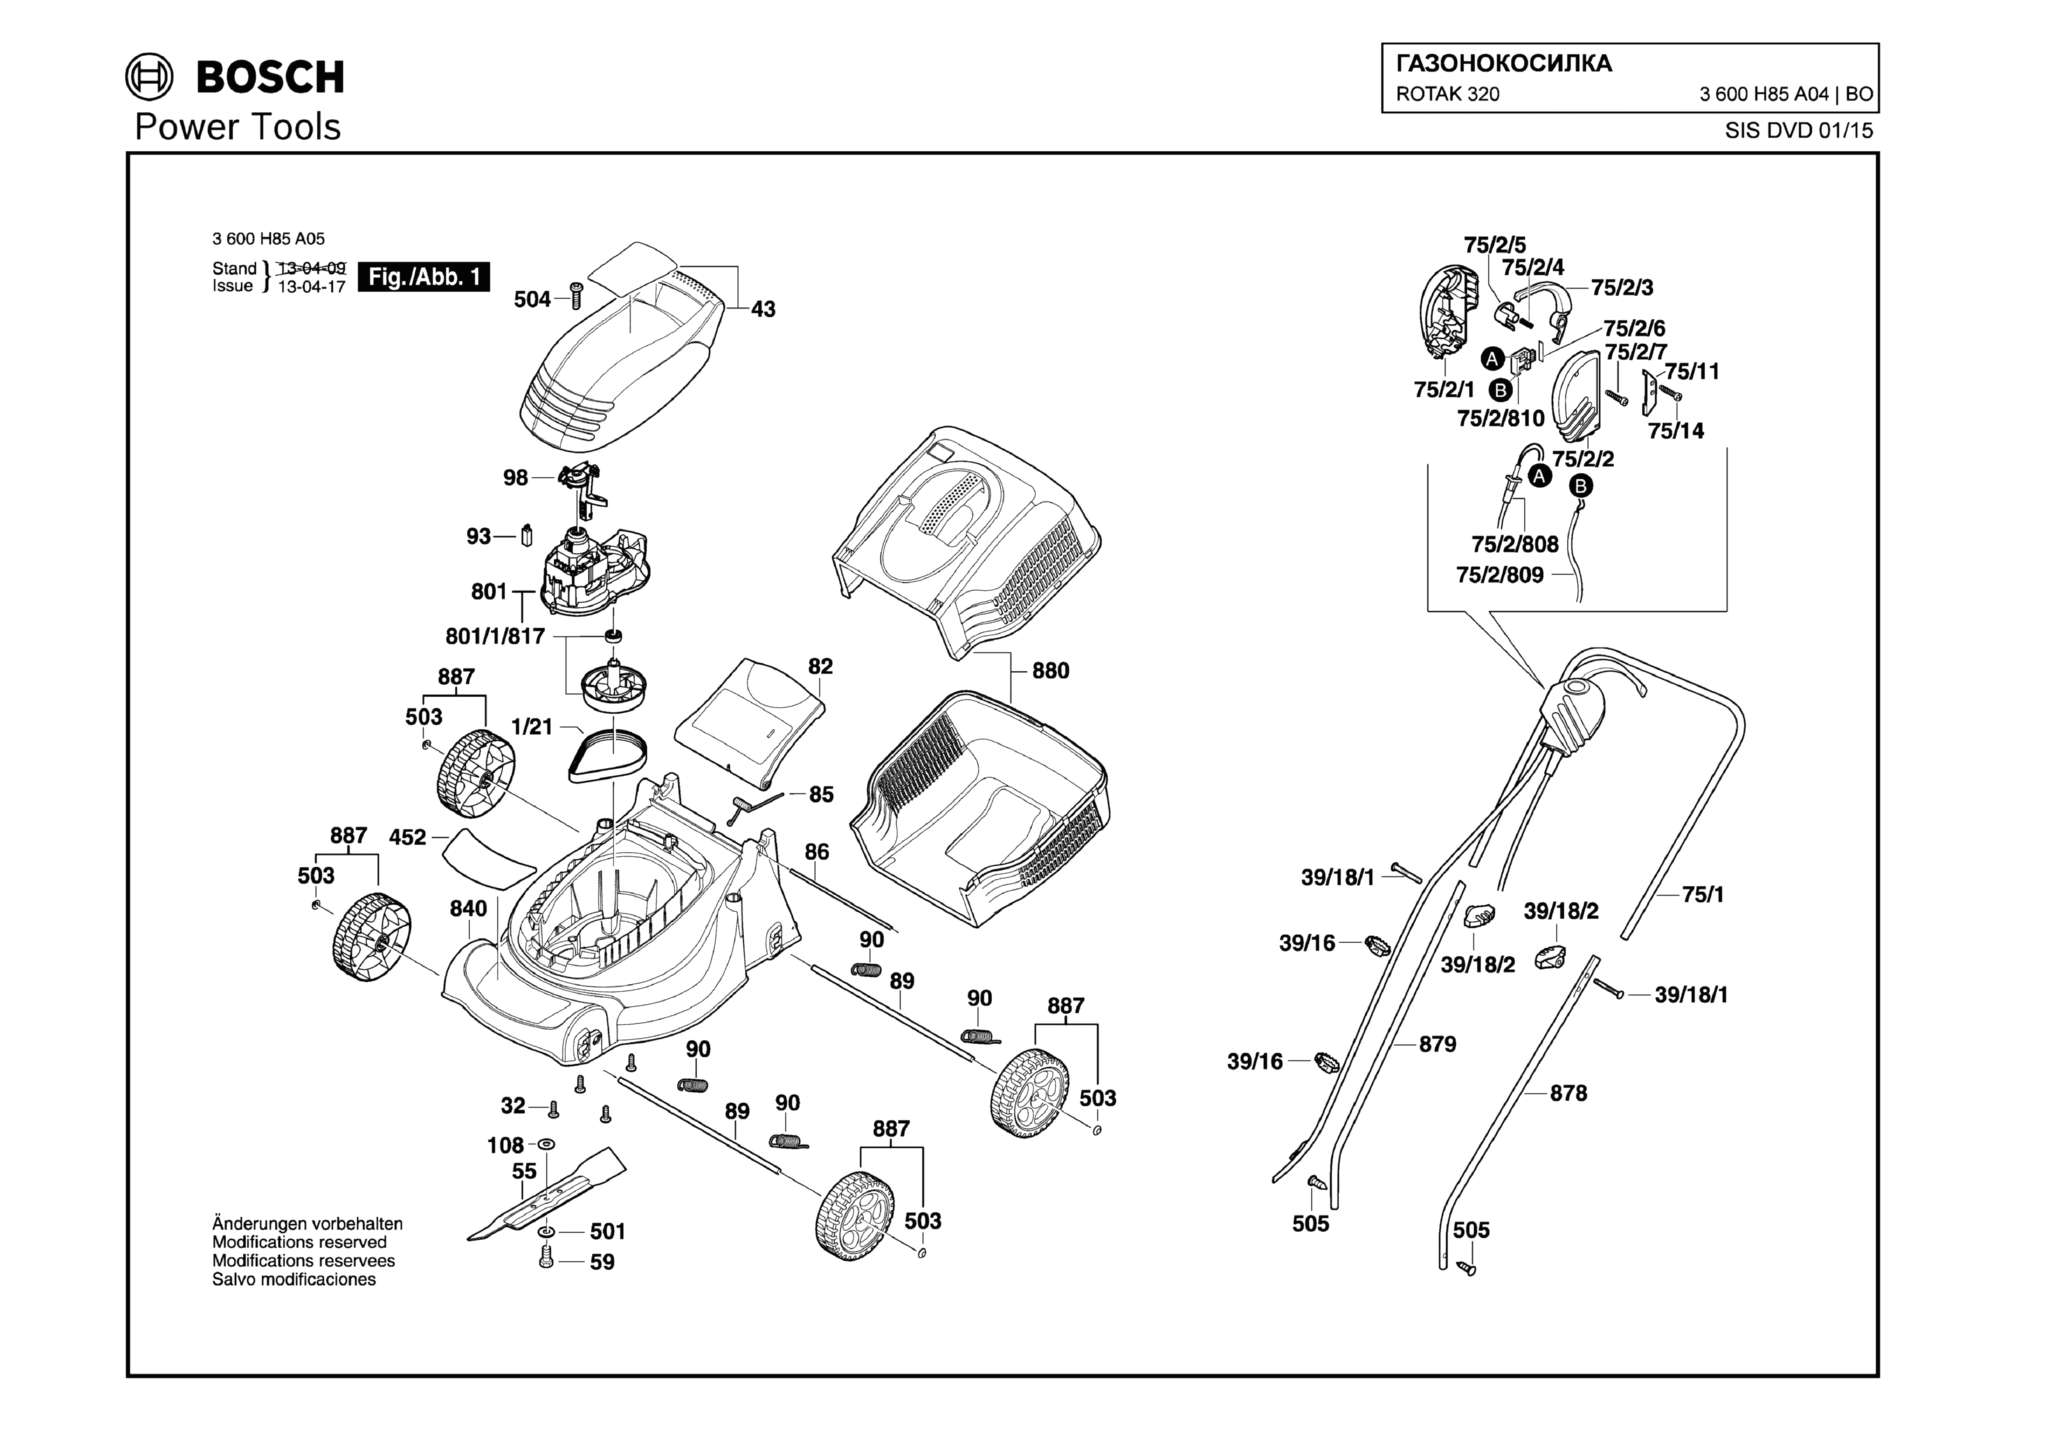 Запчасти, схема и деталировка Bosch ROTAK 320 (ТИП 3600H85A04)